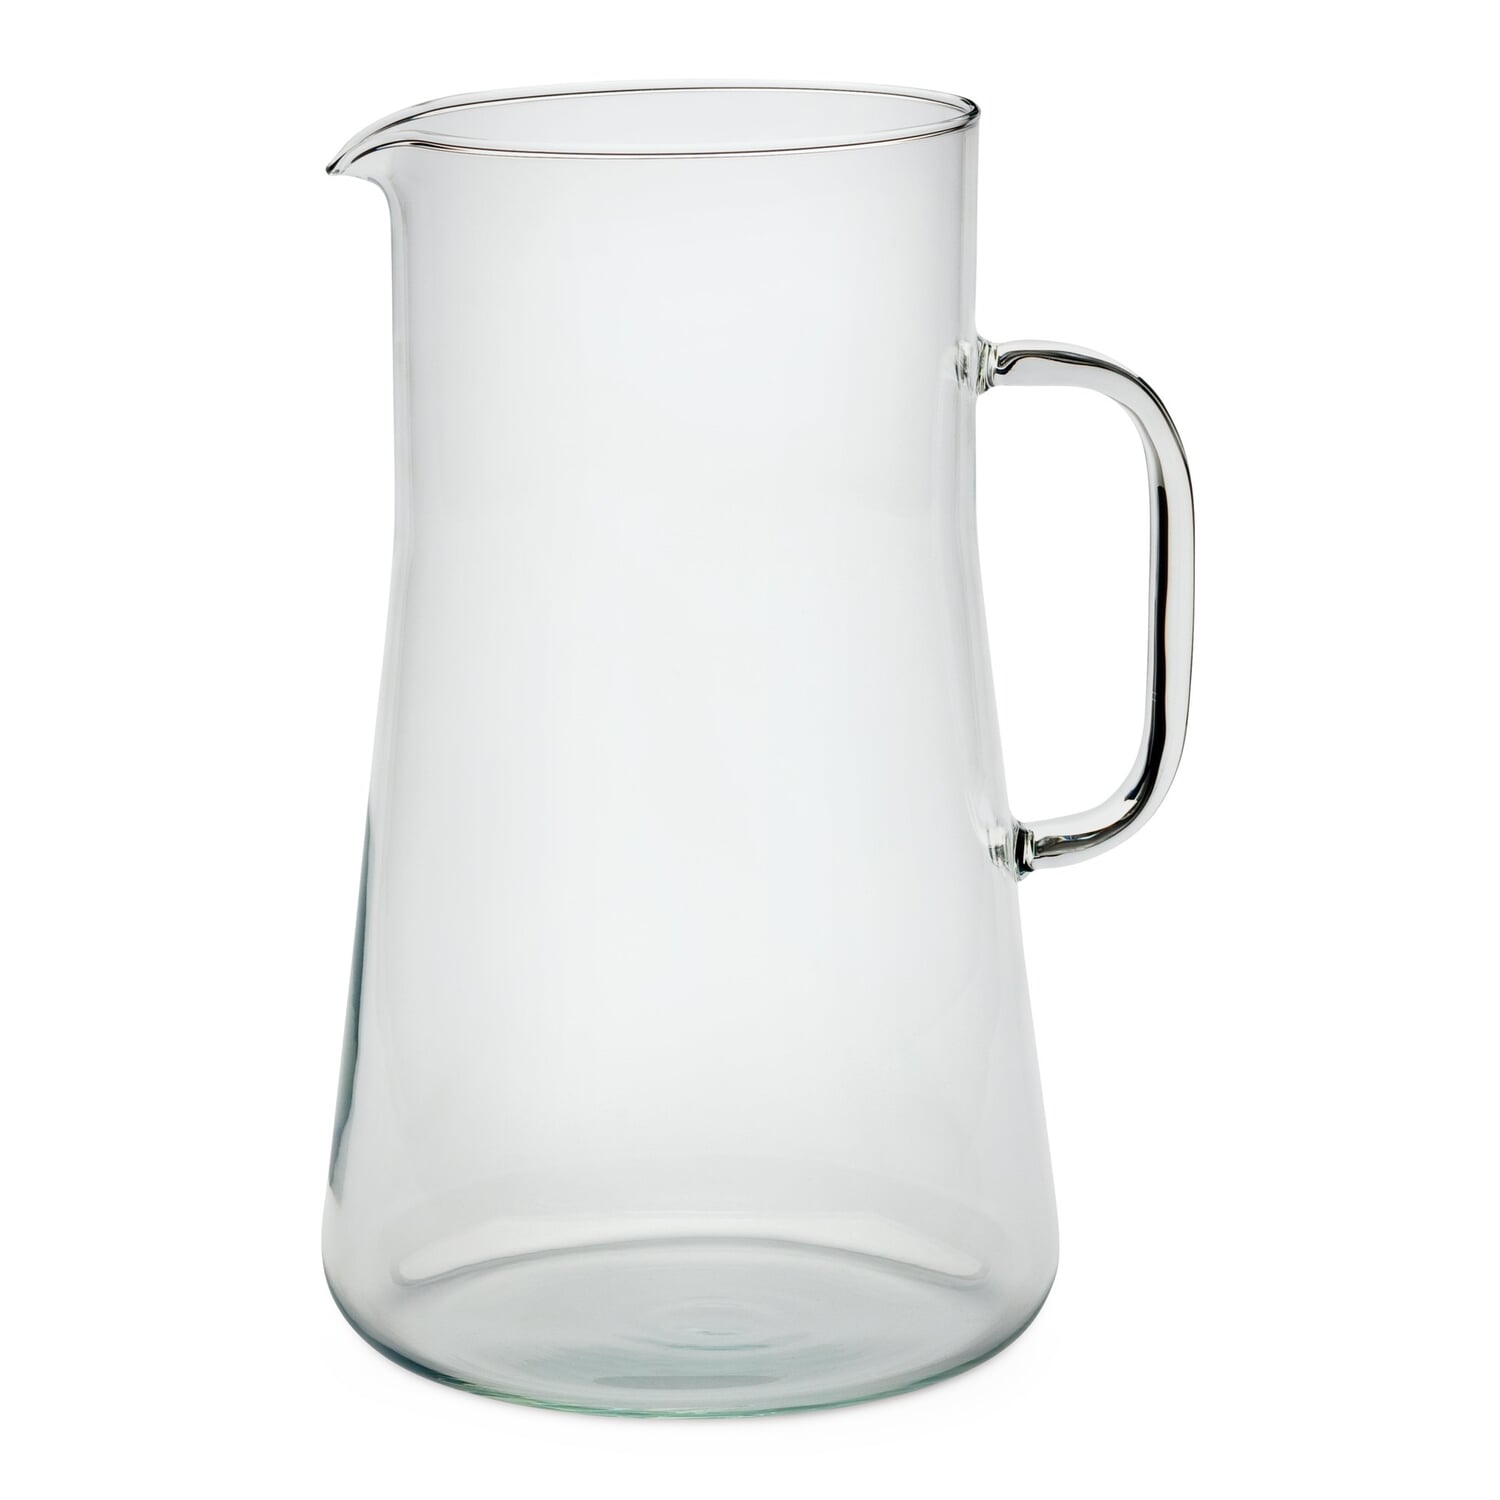 https://assets.manufactum.de/p/028/028177/28177_01.jpg/glass-jug-borosilicate-glass.jpg?profile=pdsmain_1500